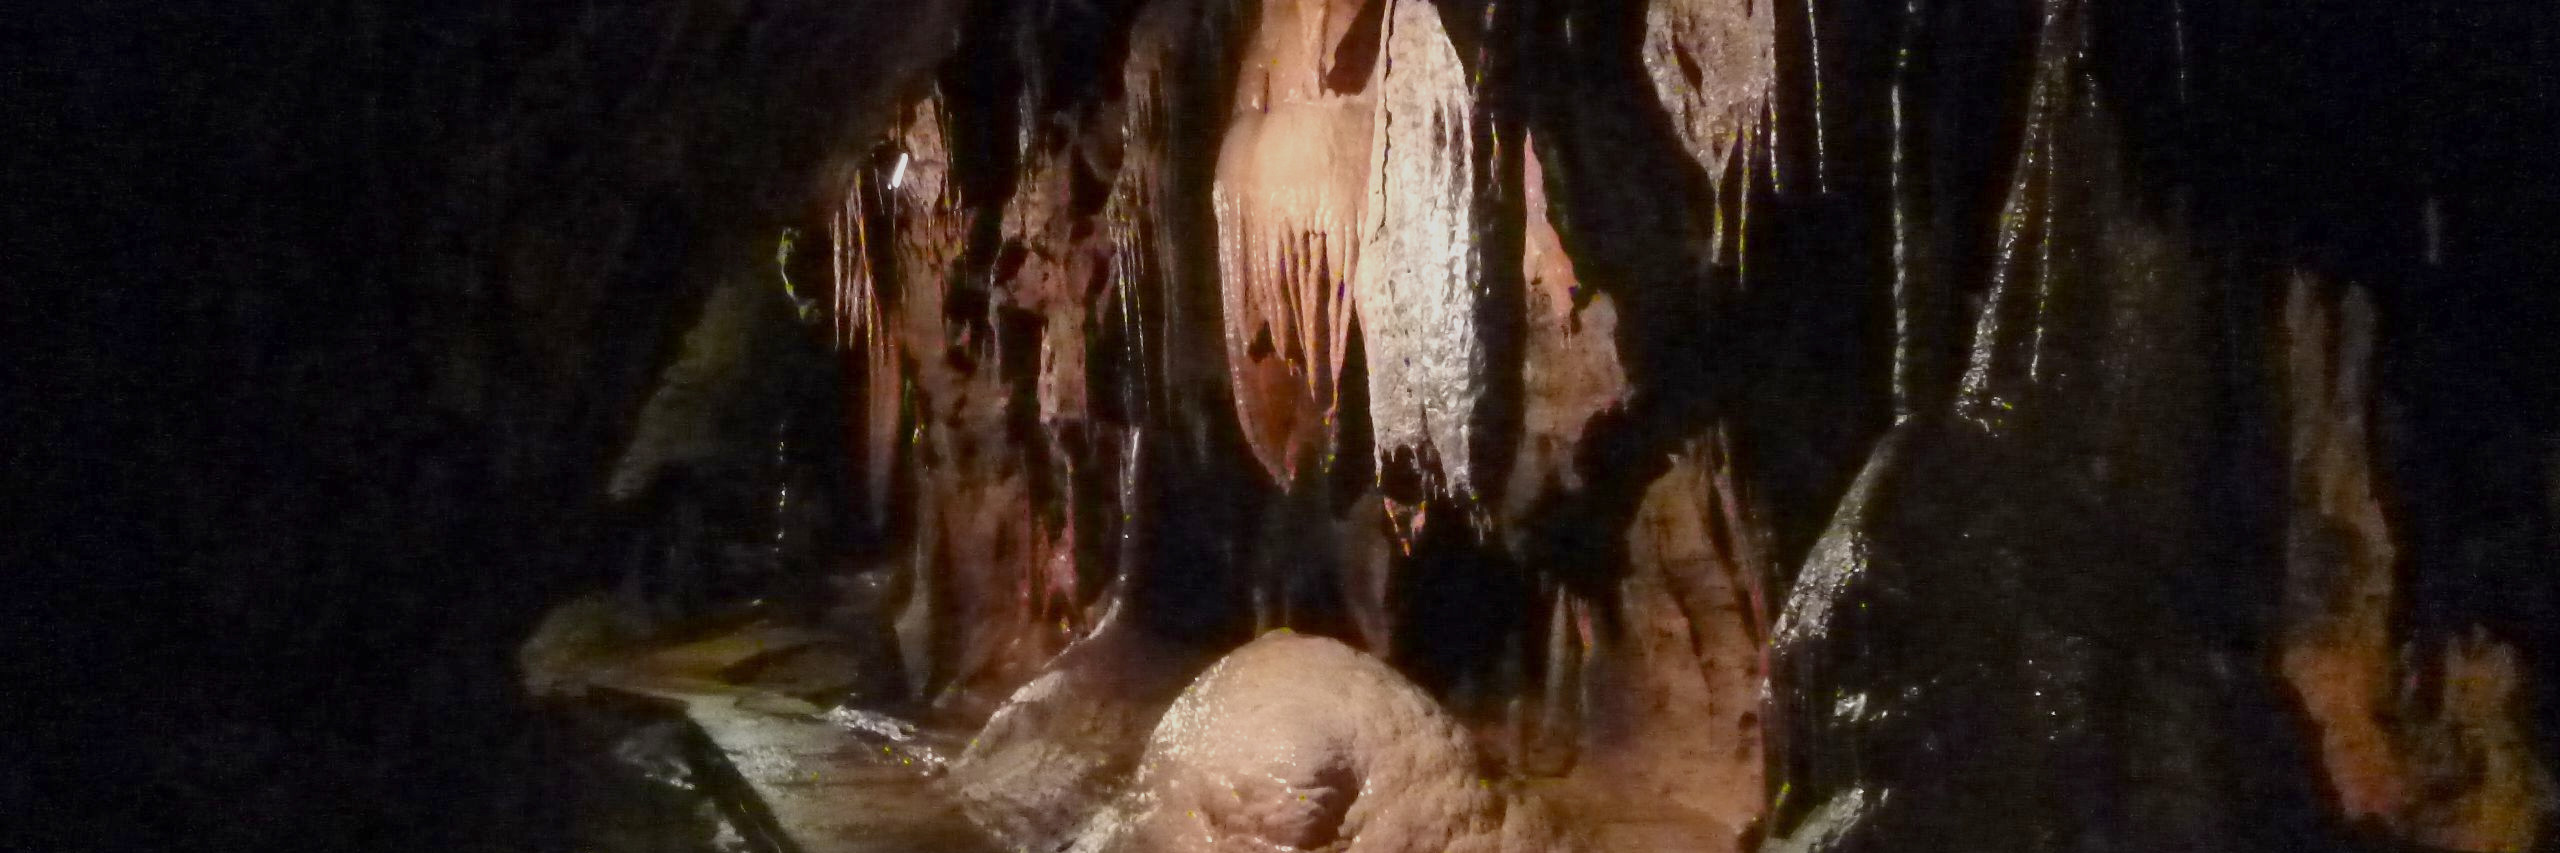 Пещера Орловача. Фото: Елена Арсениевич, CC BY-SA 3.0